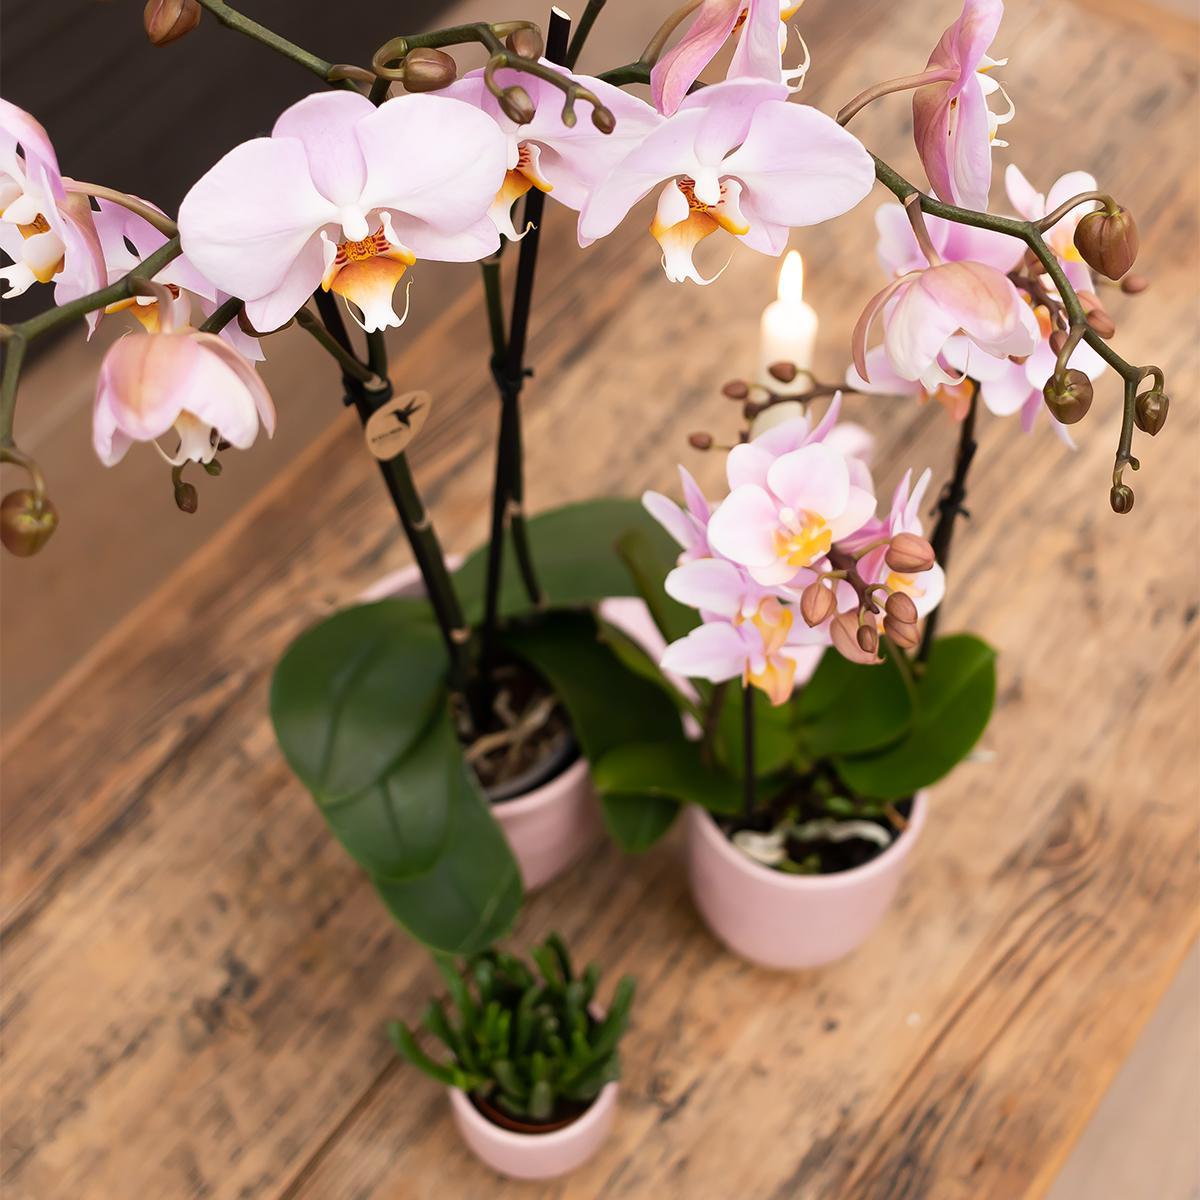 Rosa Phalaenopsis-Orchidee bestellen